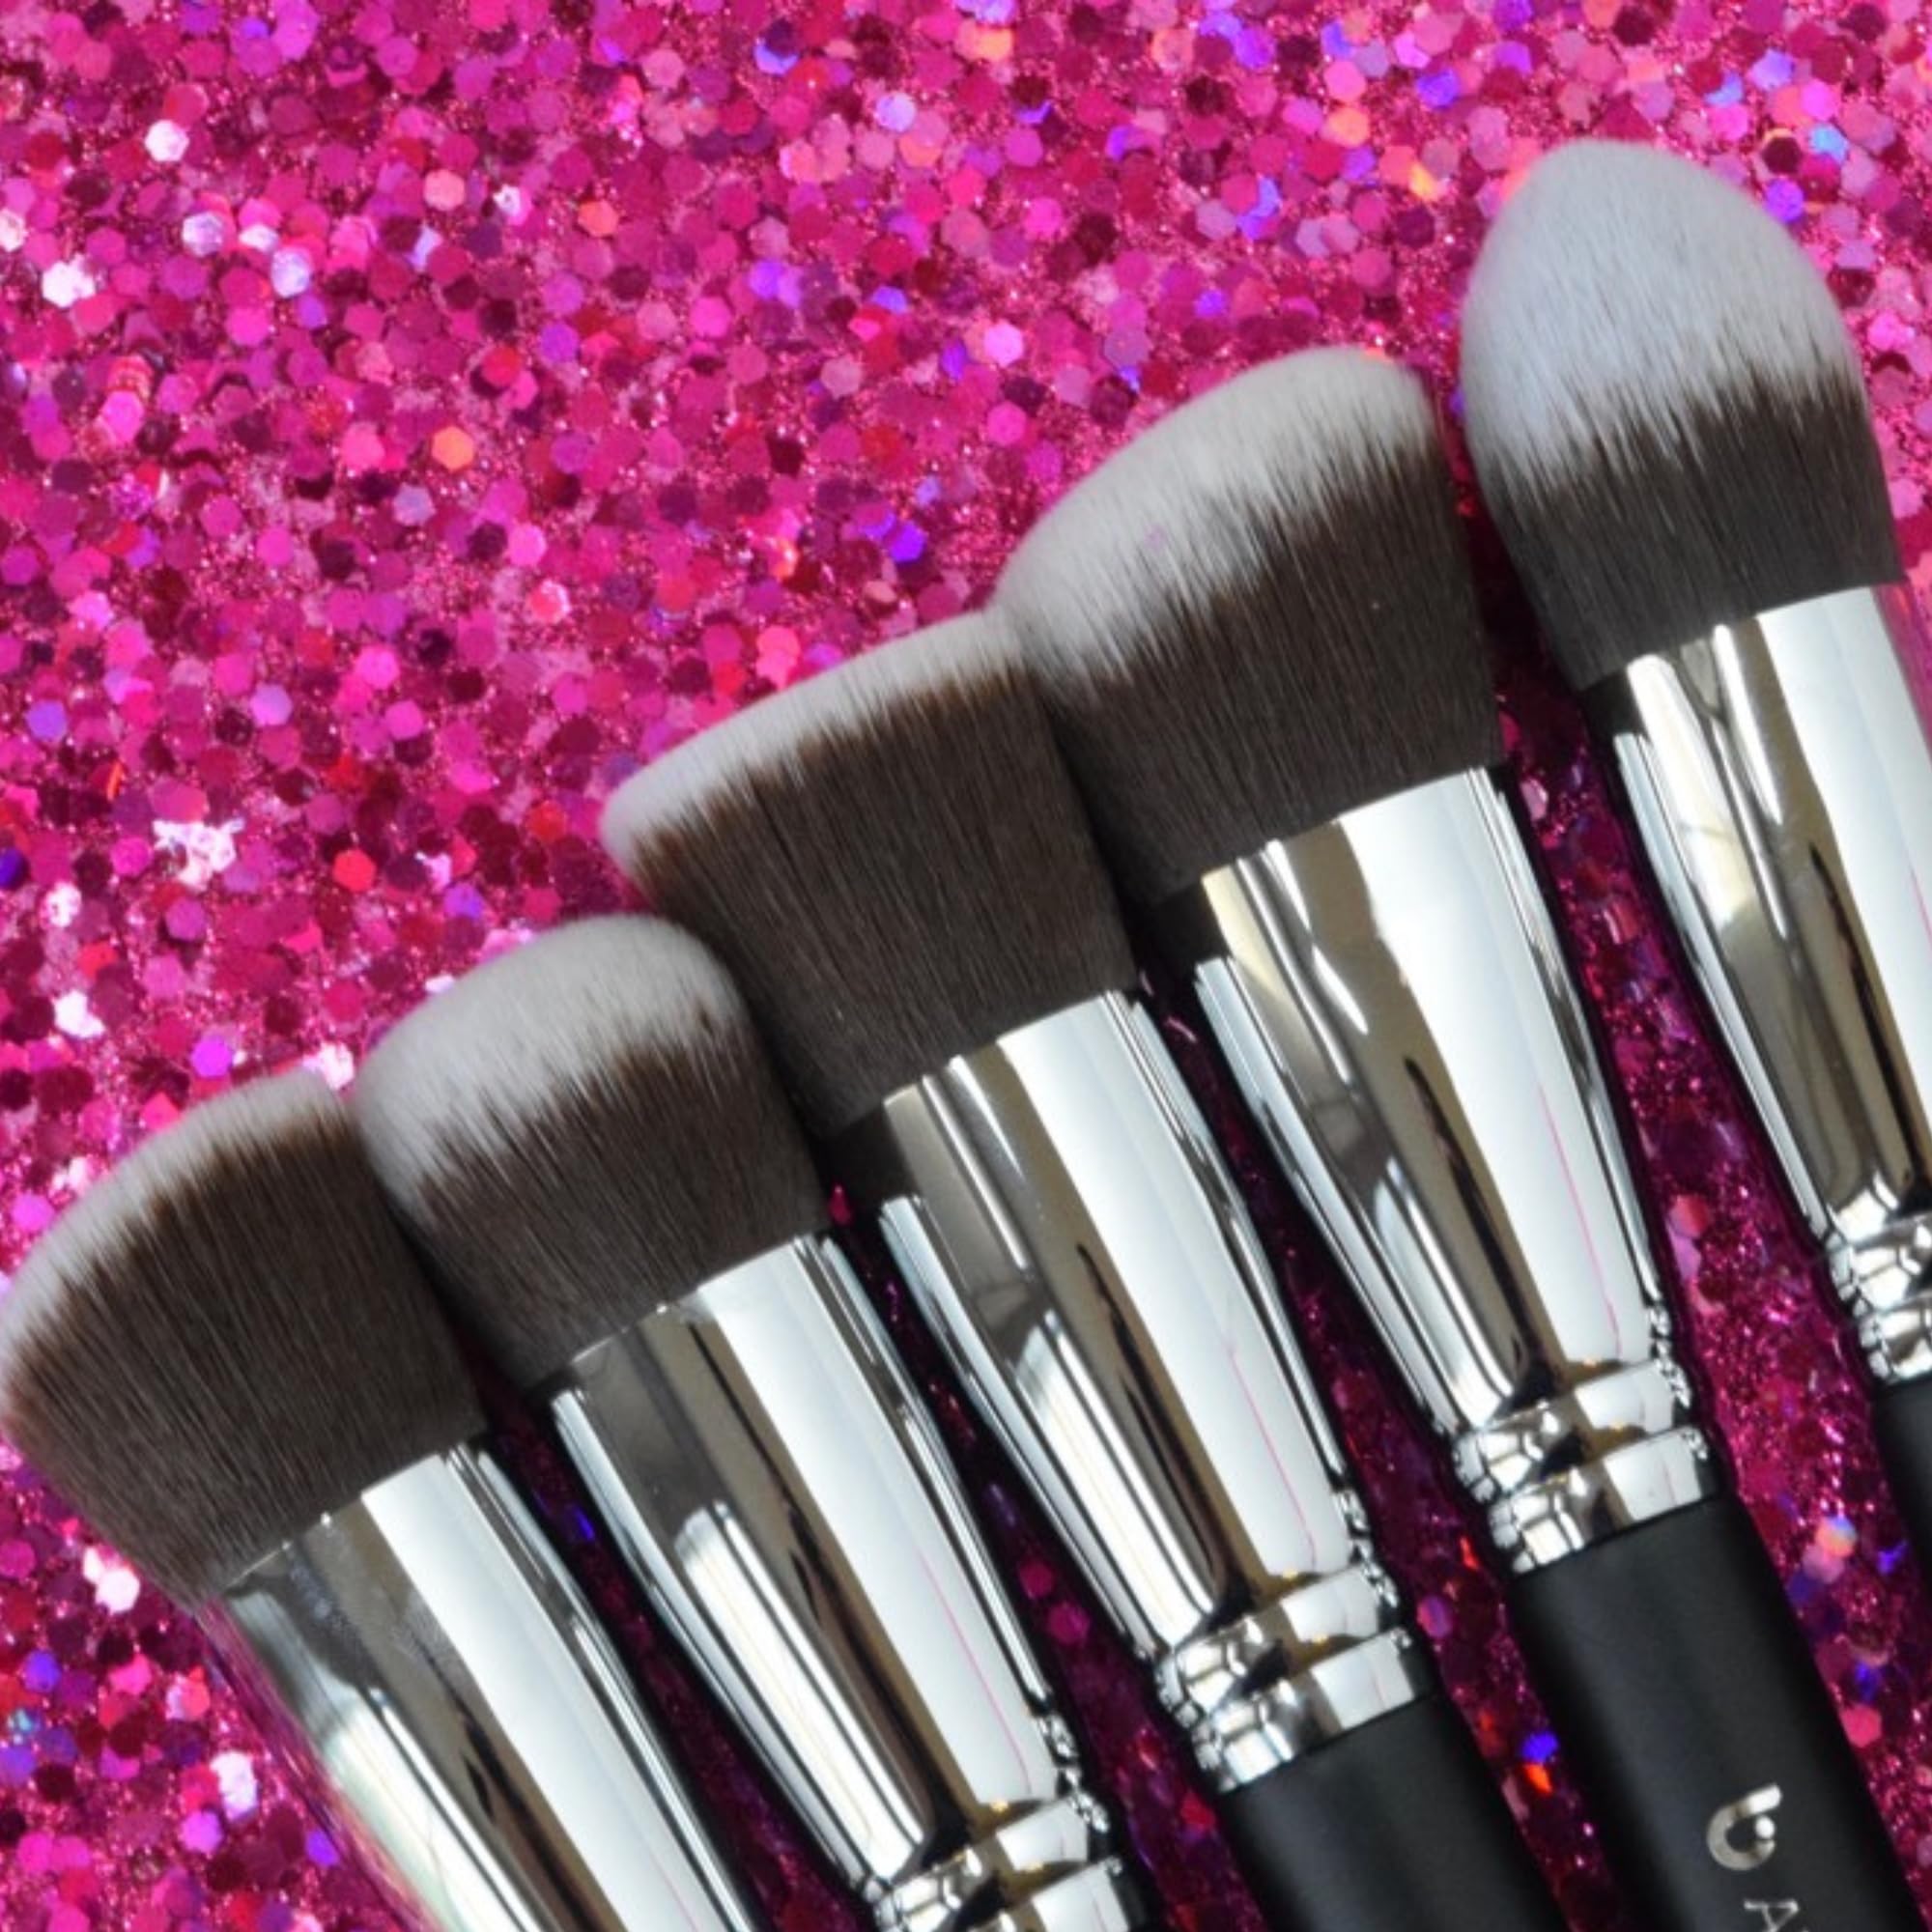 Mineral Powder Foundation Brush for Face – Round Kabuki Brush for Blending, Buffing, Blurring, Setting, Finishing with Loose, Pressed Powders, Liquid, Cream, Bronzer, Blush Makeup, Full Coverage